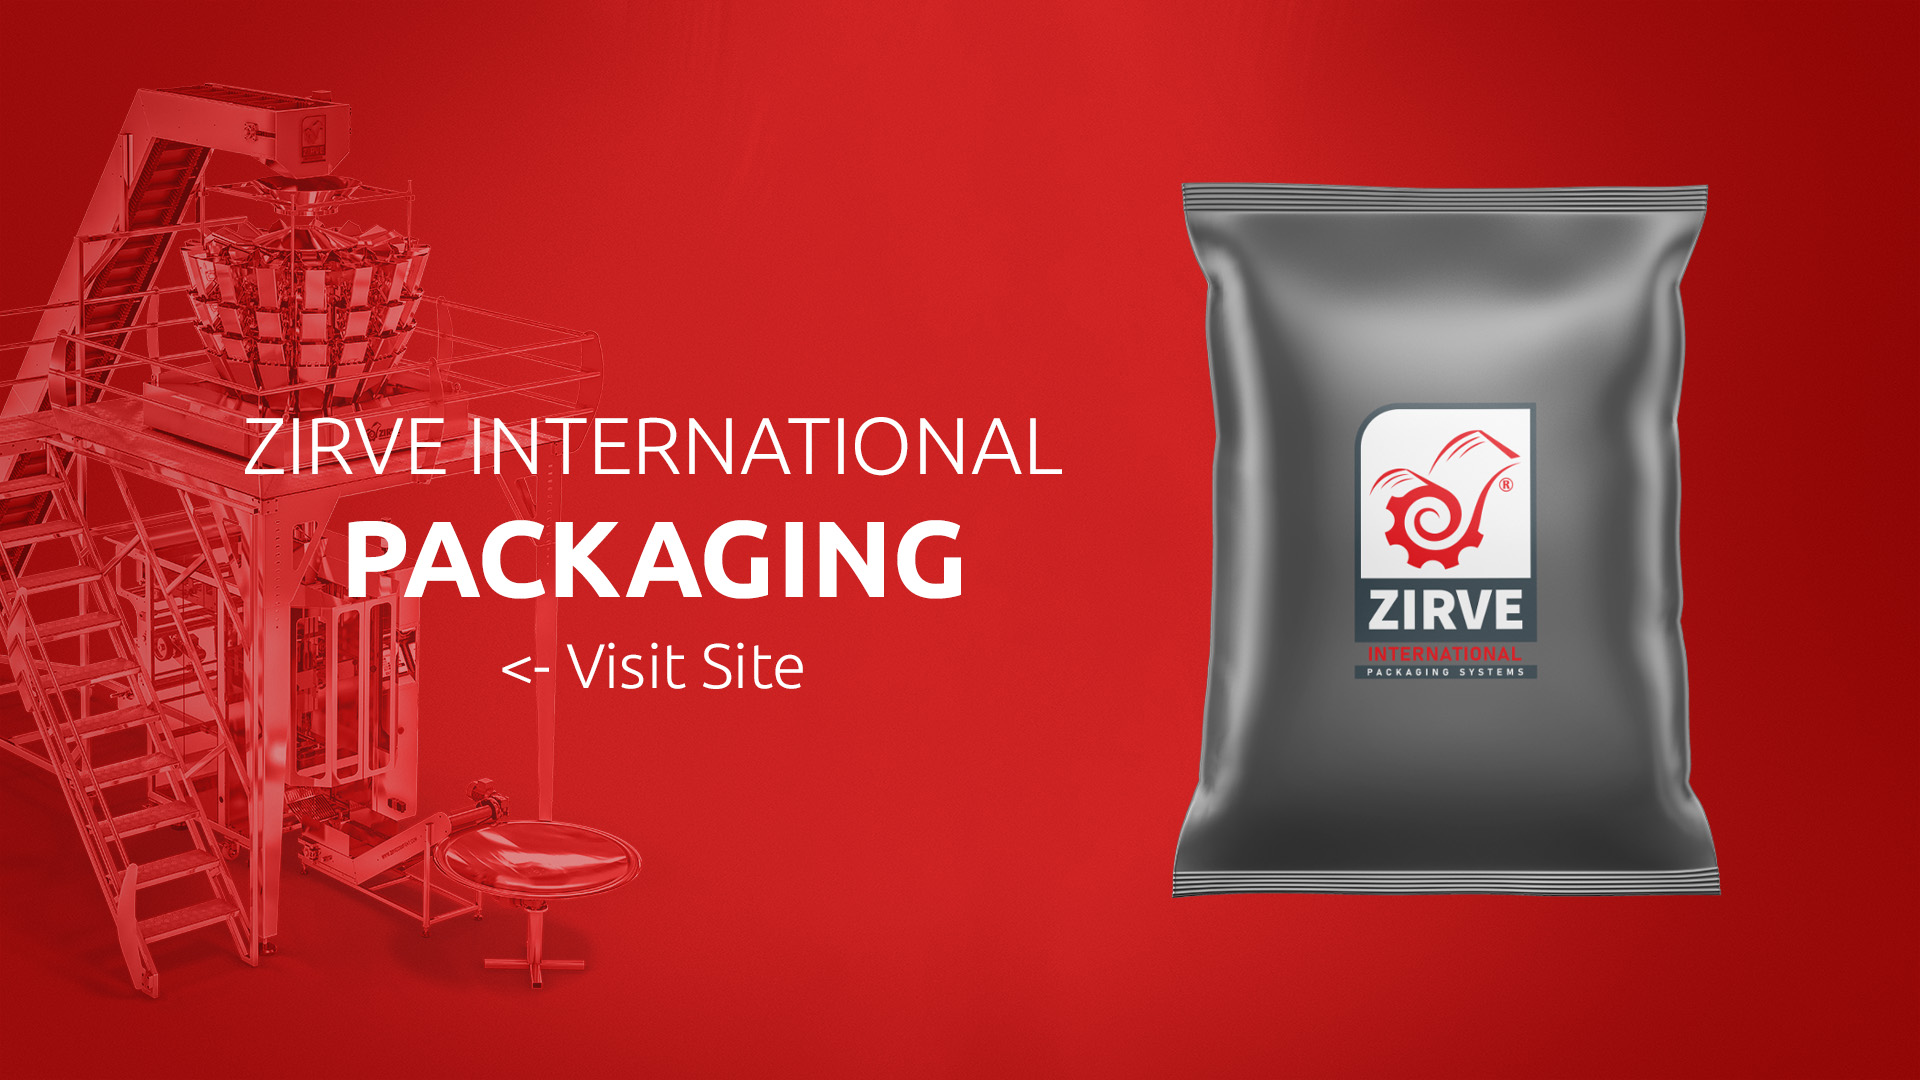 Zirve International packing visit us